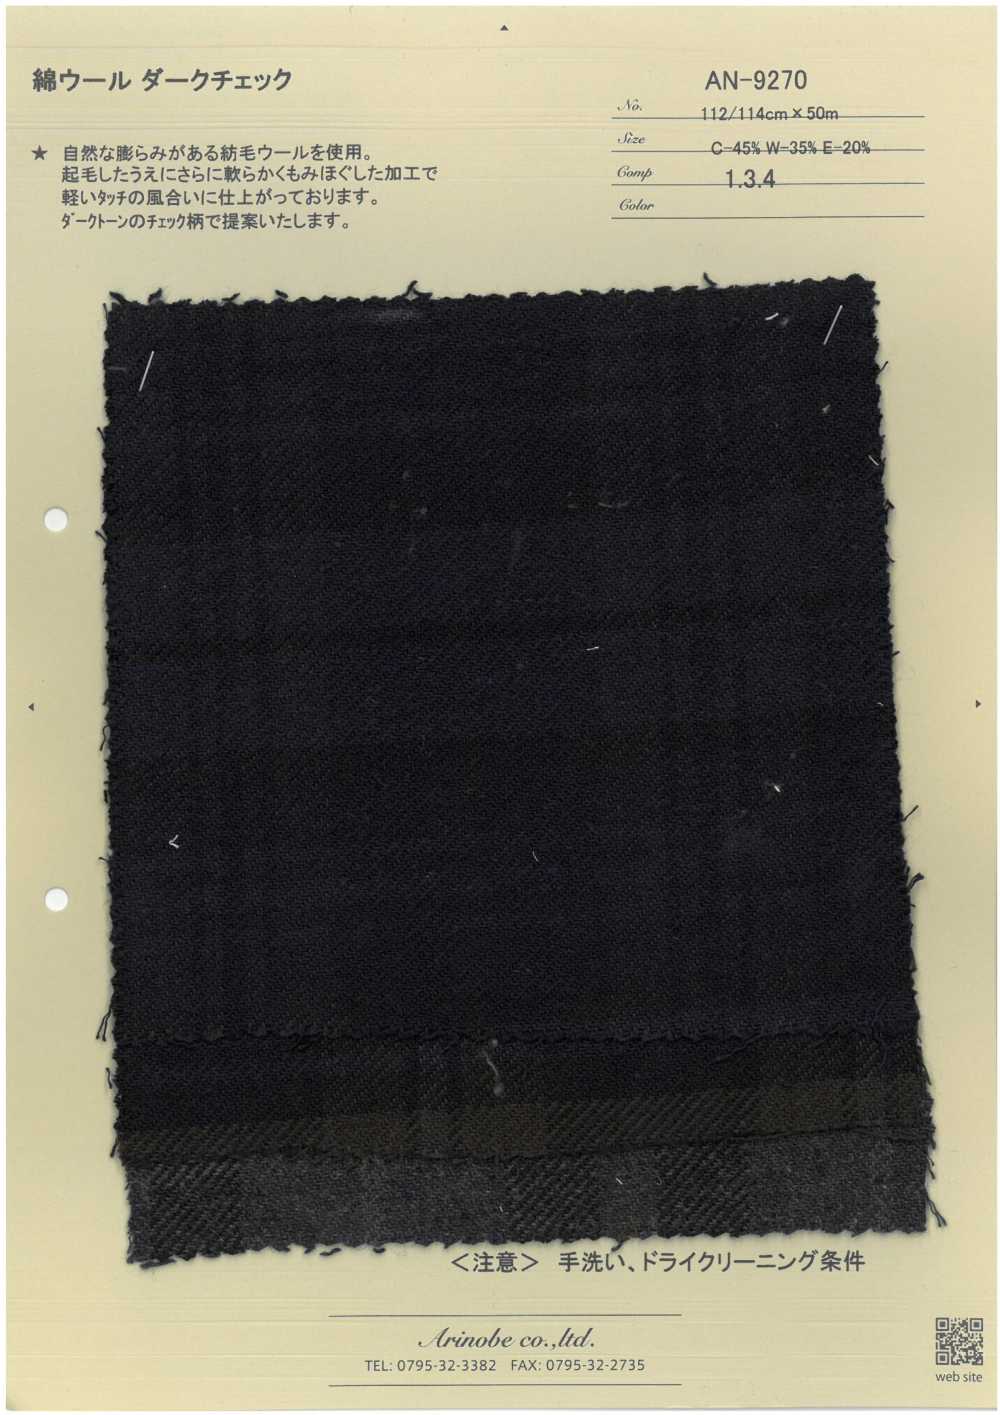 AN-9270 Dunkles Karomuster Aus Baumwolle[Textilgewebe] ARINOBE CO., LTD.